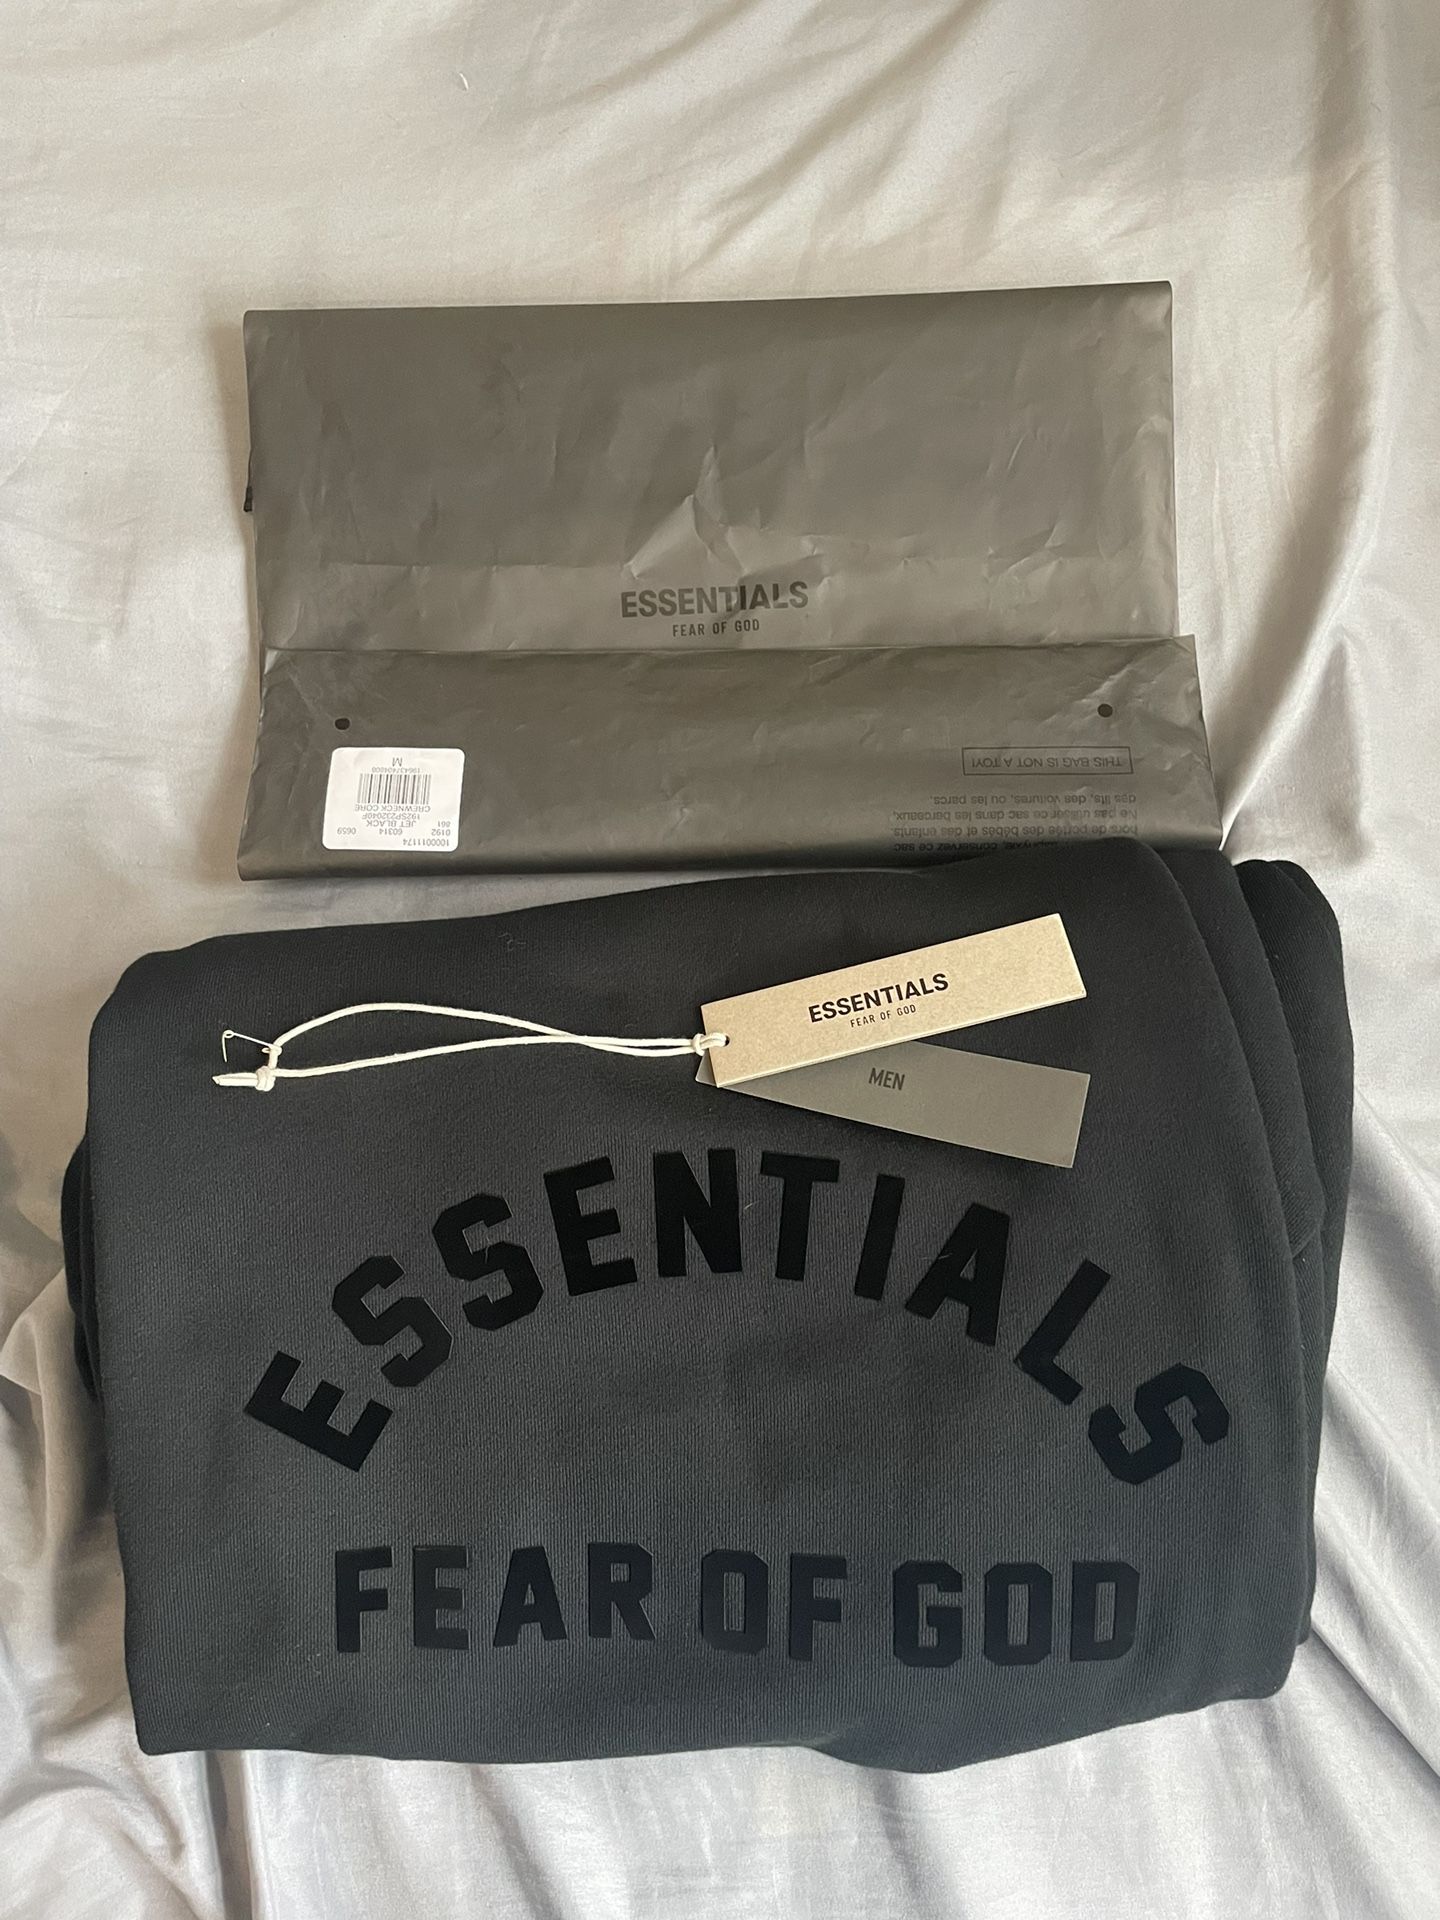  Essentials Fear of God Crewneck/Hoodie Jet black 